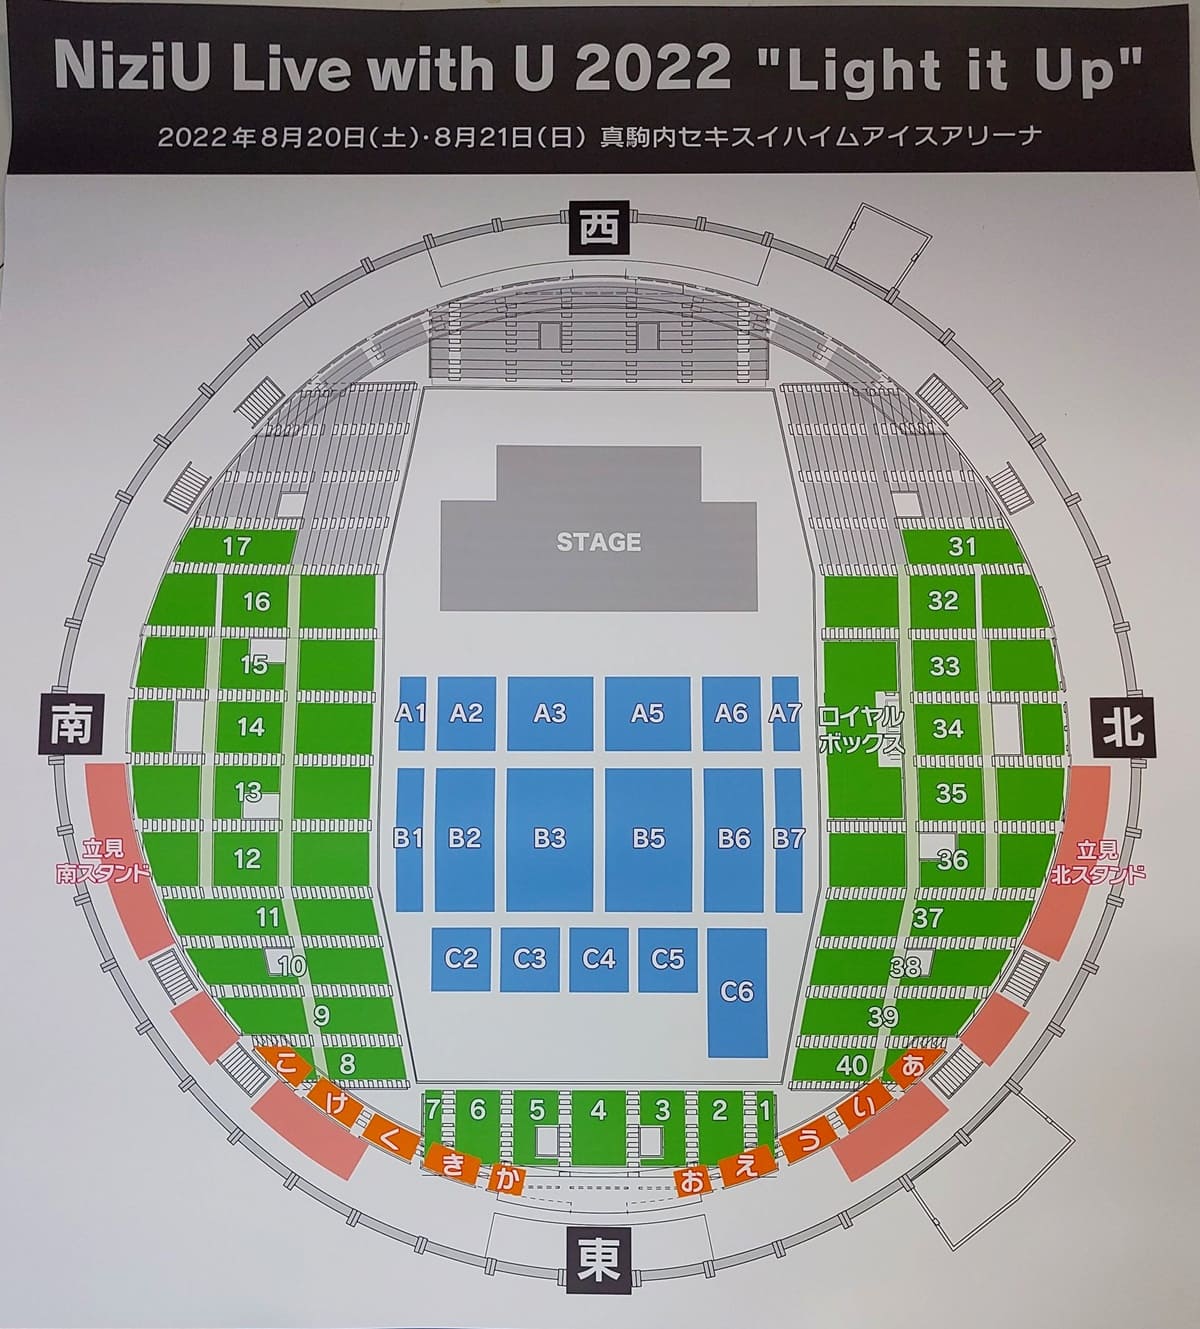 NiziU Live with U 2022 “Light it Up” 真駒内セキスイハイムアイスアリーナ 座席表・アリーナ